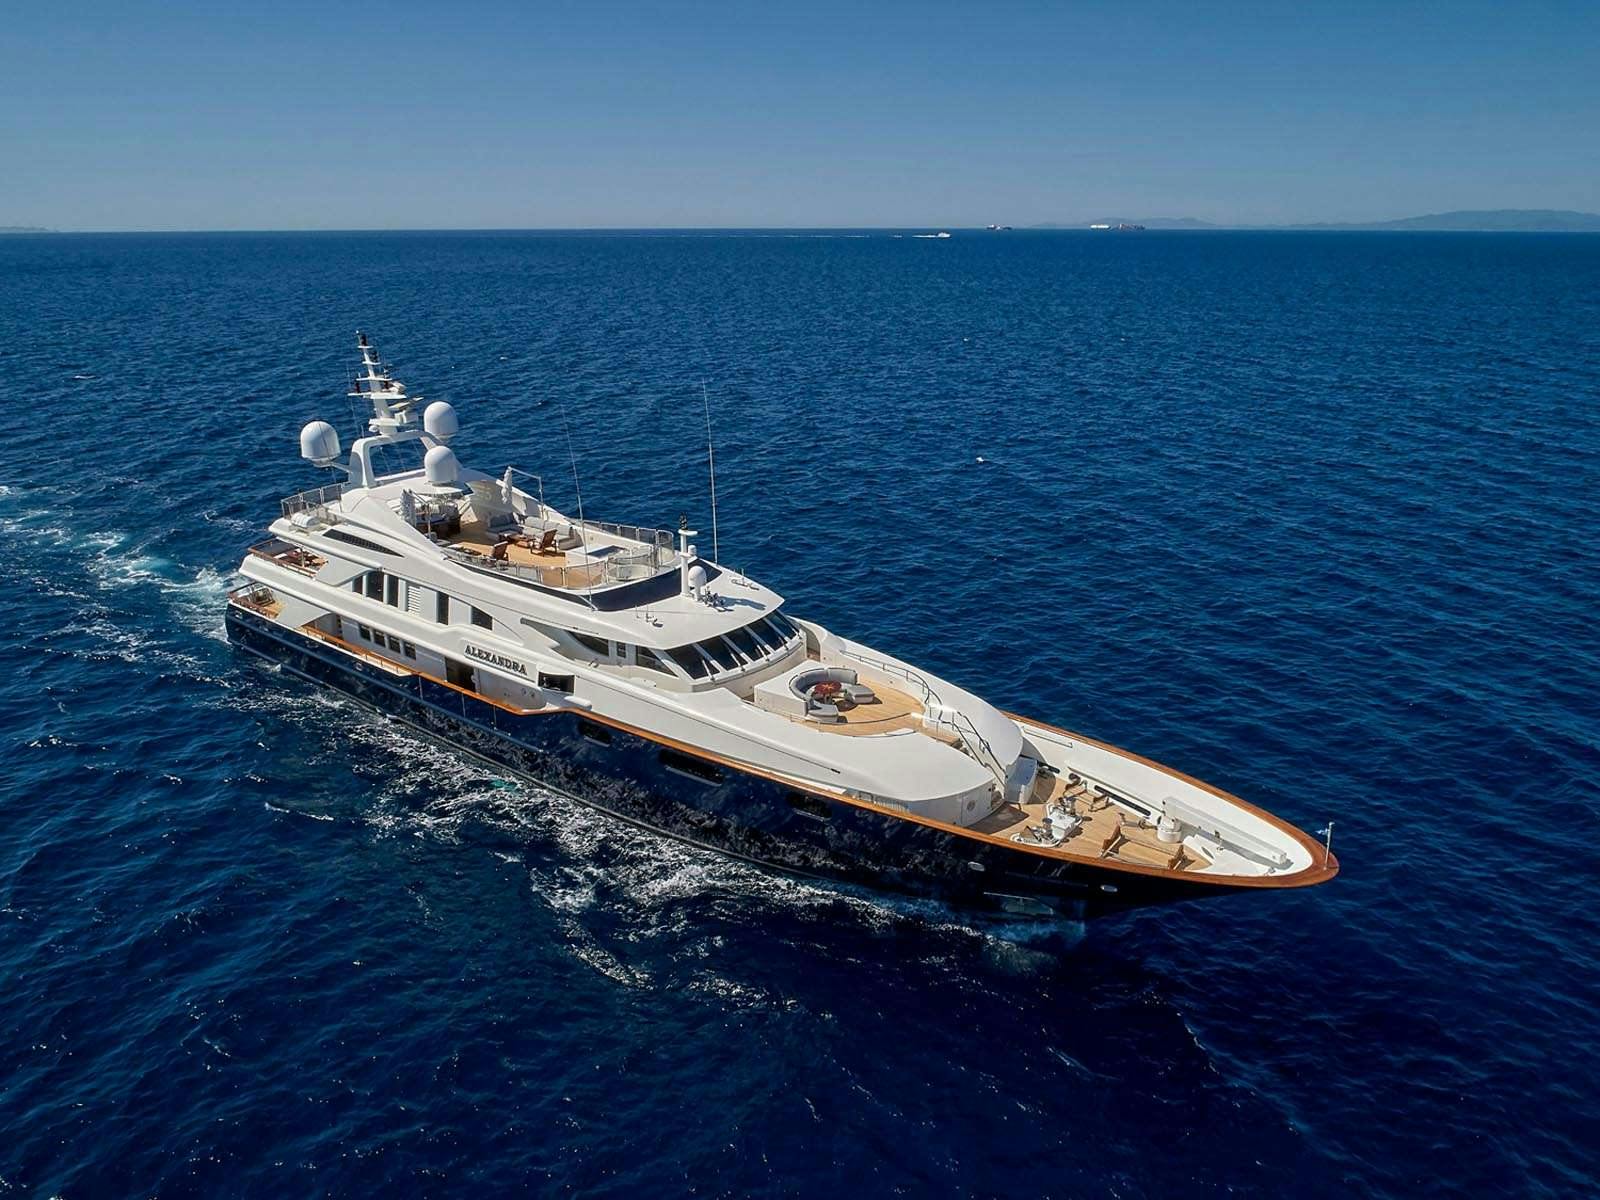 alexandra - Yacht Charter Greece & Boat hire in East Mediterranean 1